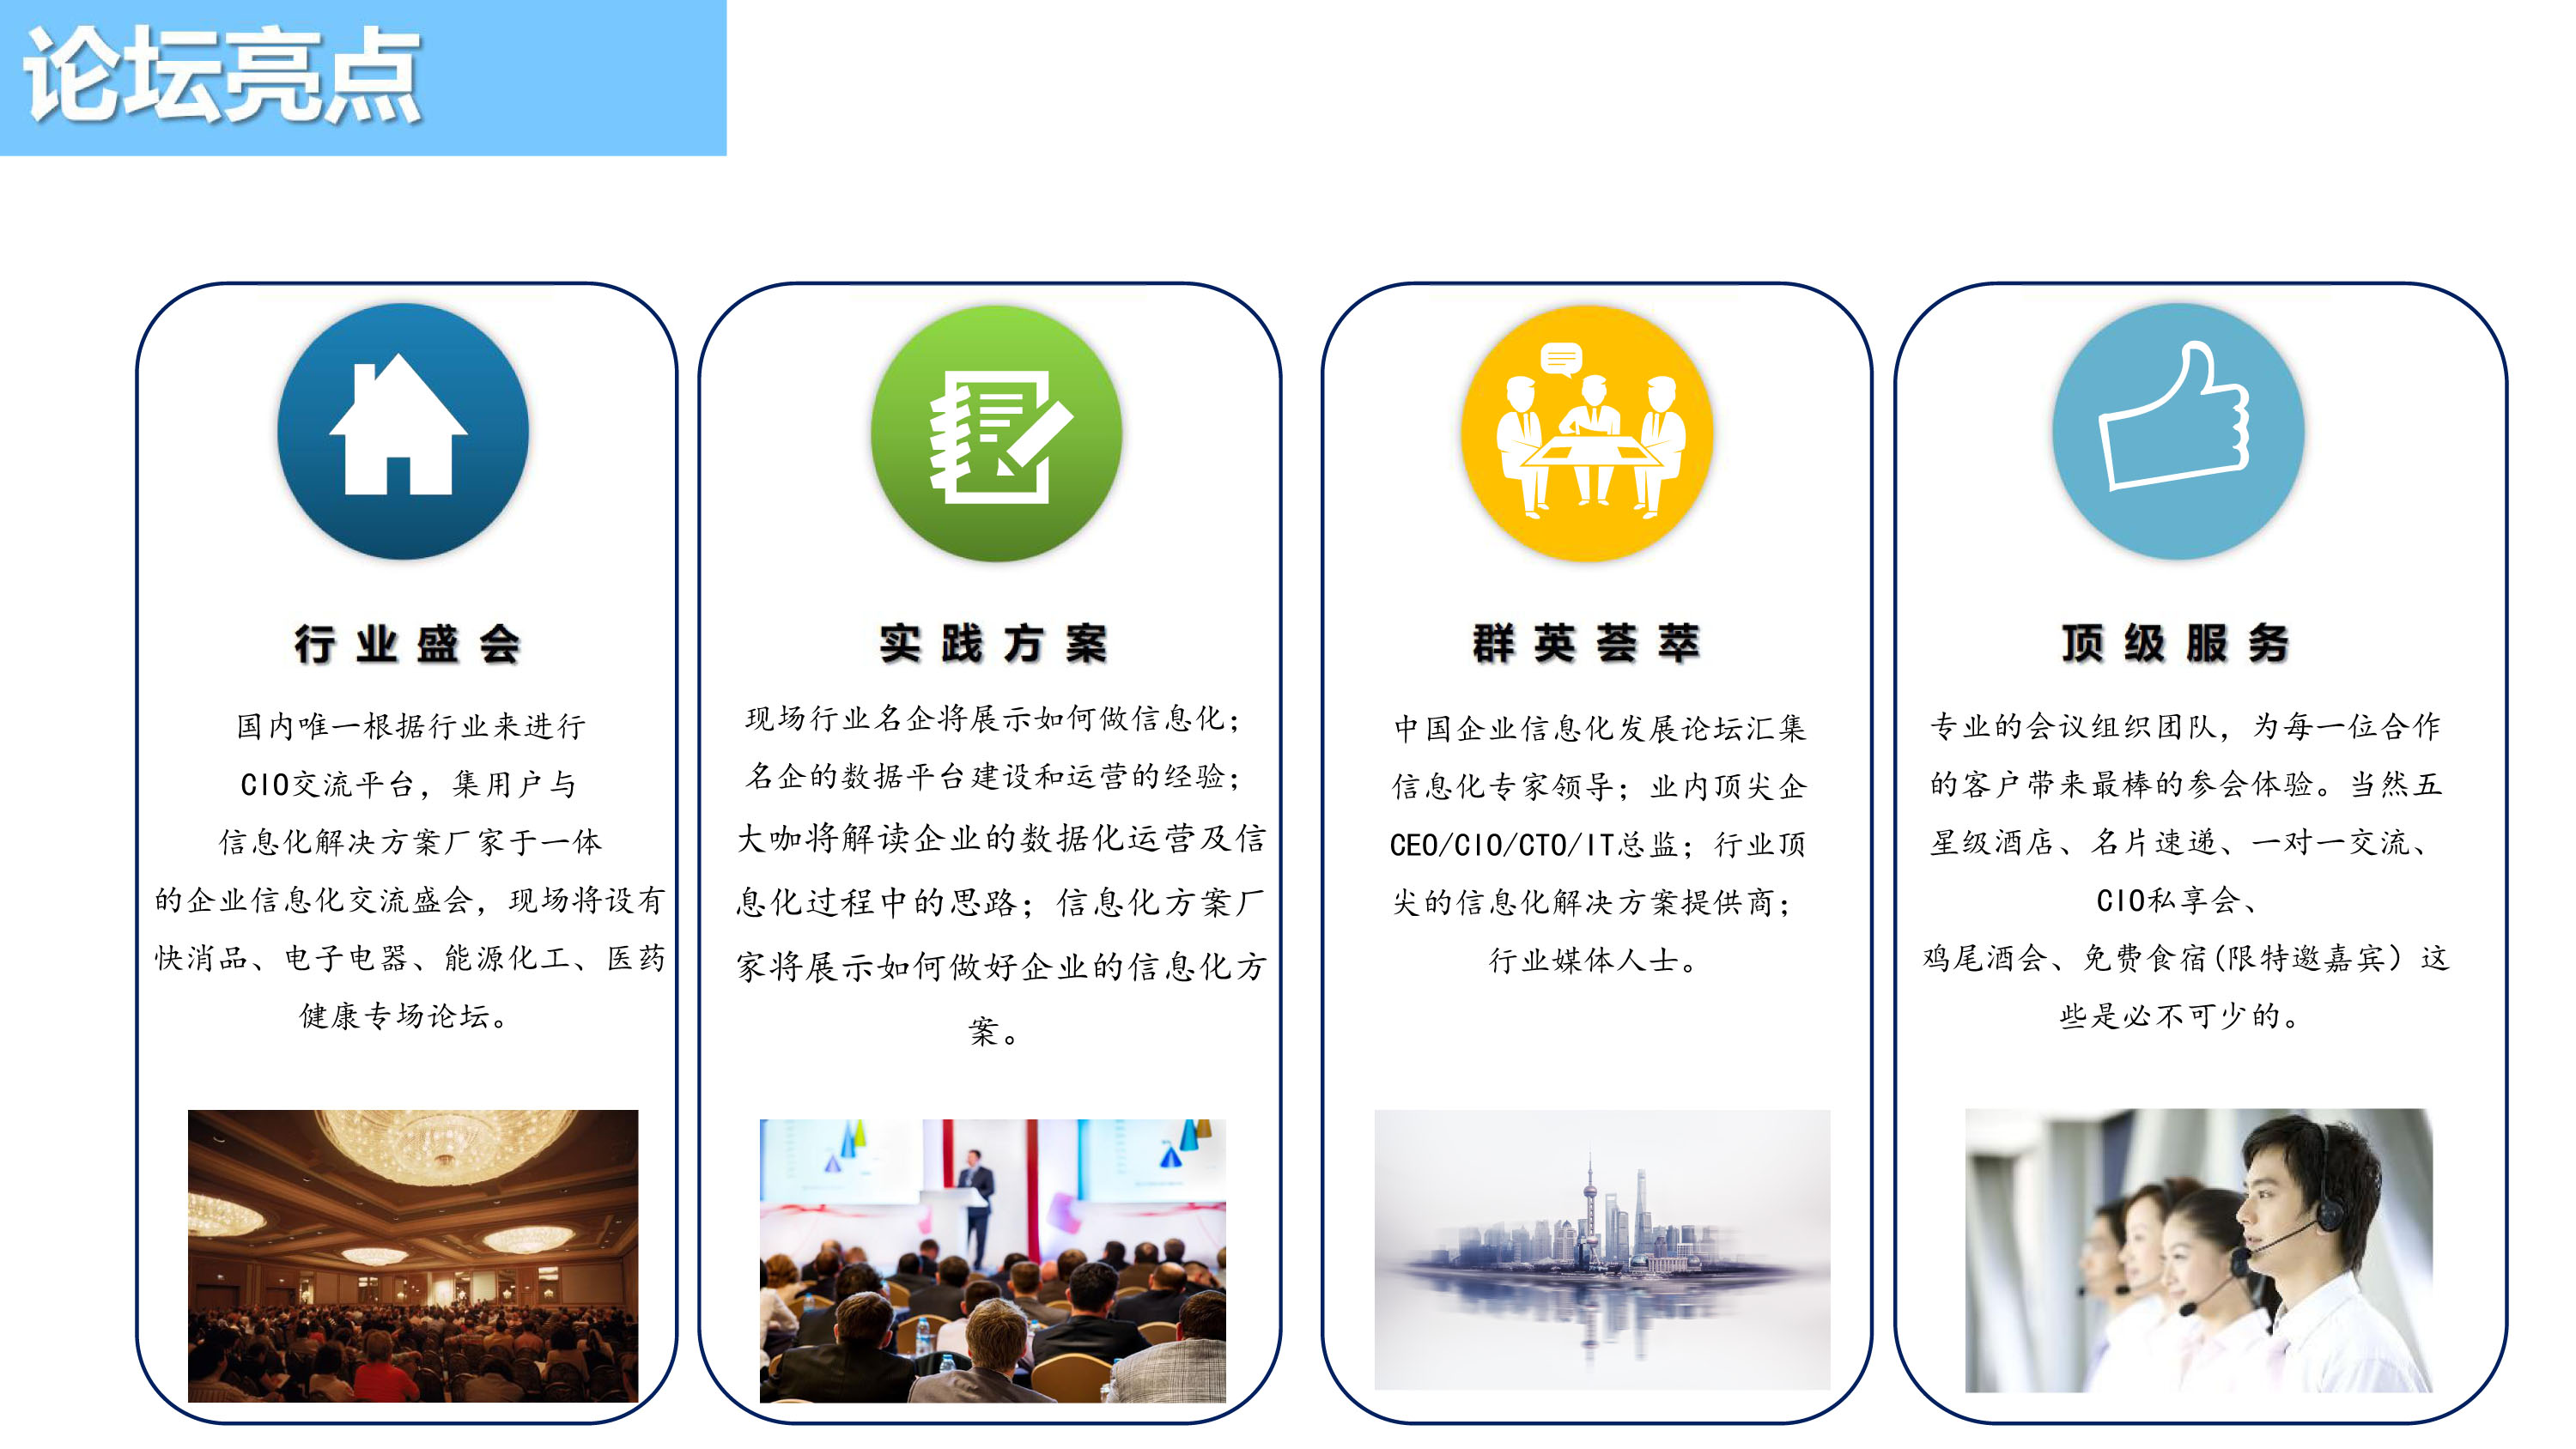 2018 CEID 中国企业信息化发展论坛——医药健康行业信息化发展论坛